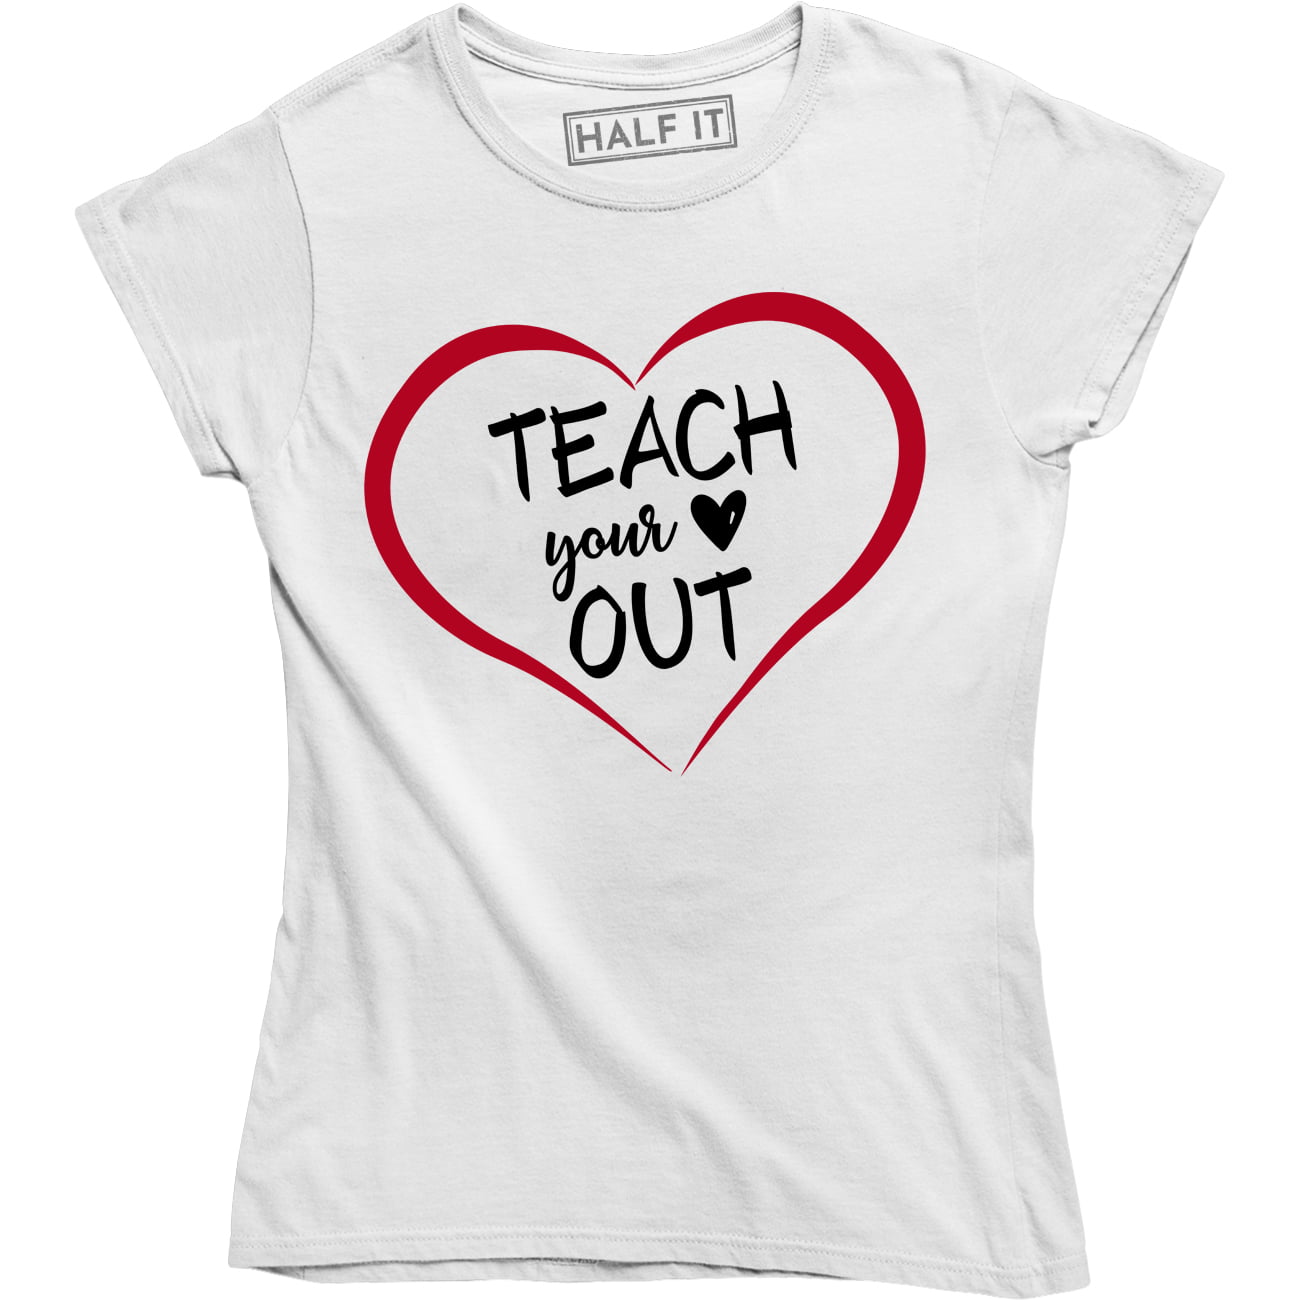 Christmas shirt for teacher Anniversary Shirts for teachers One Merry teacher shirt for valentines